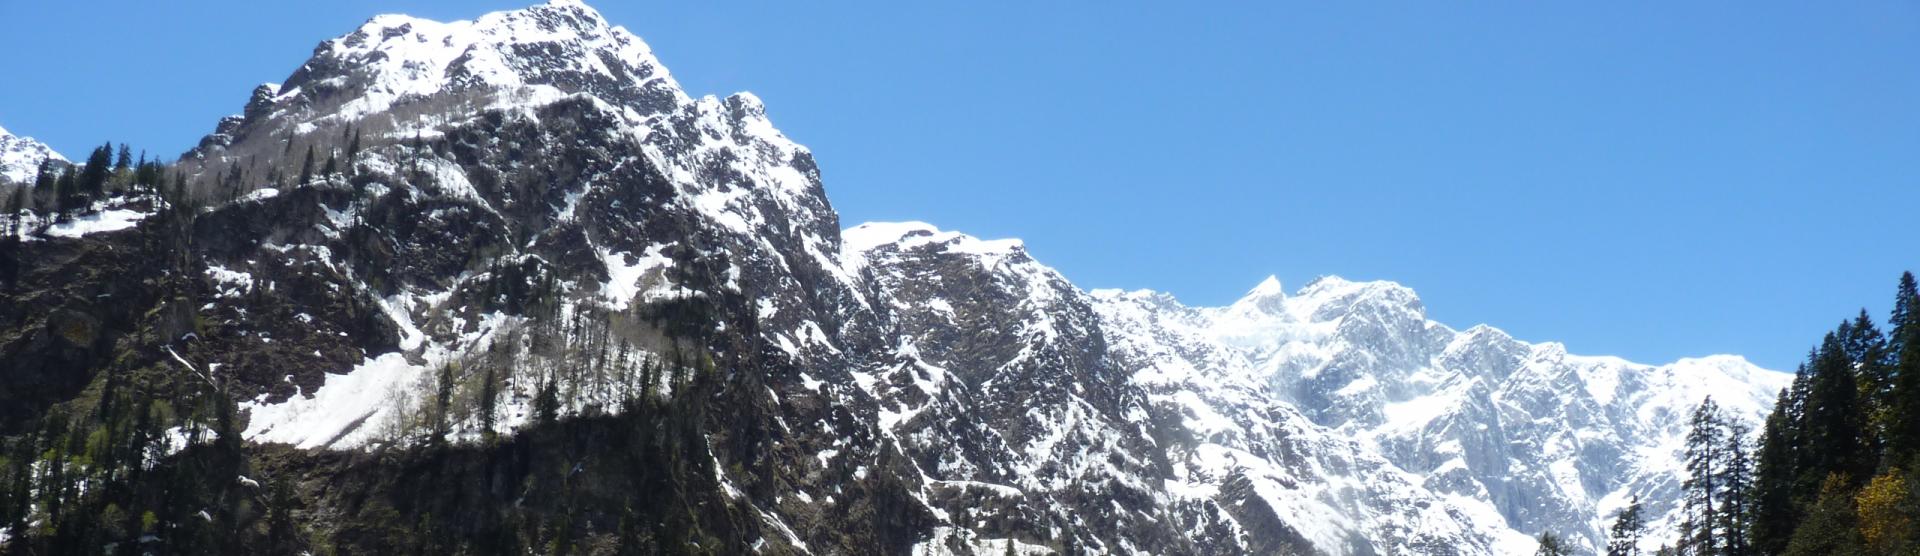 Snow avalanche path at Indian Himalayas